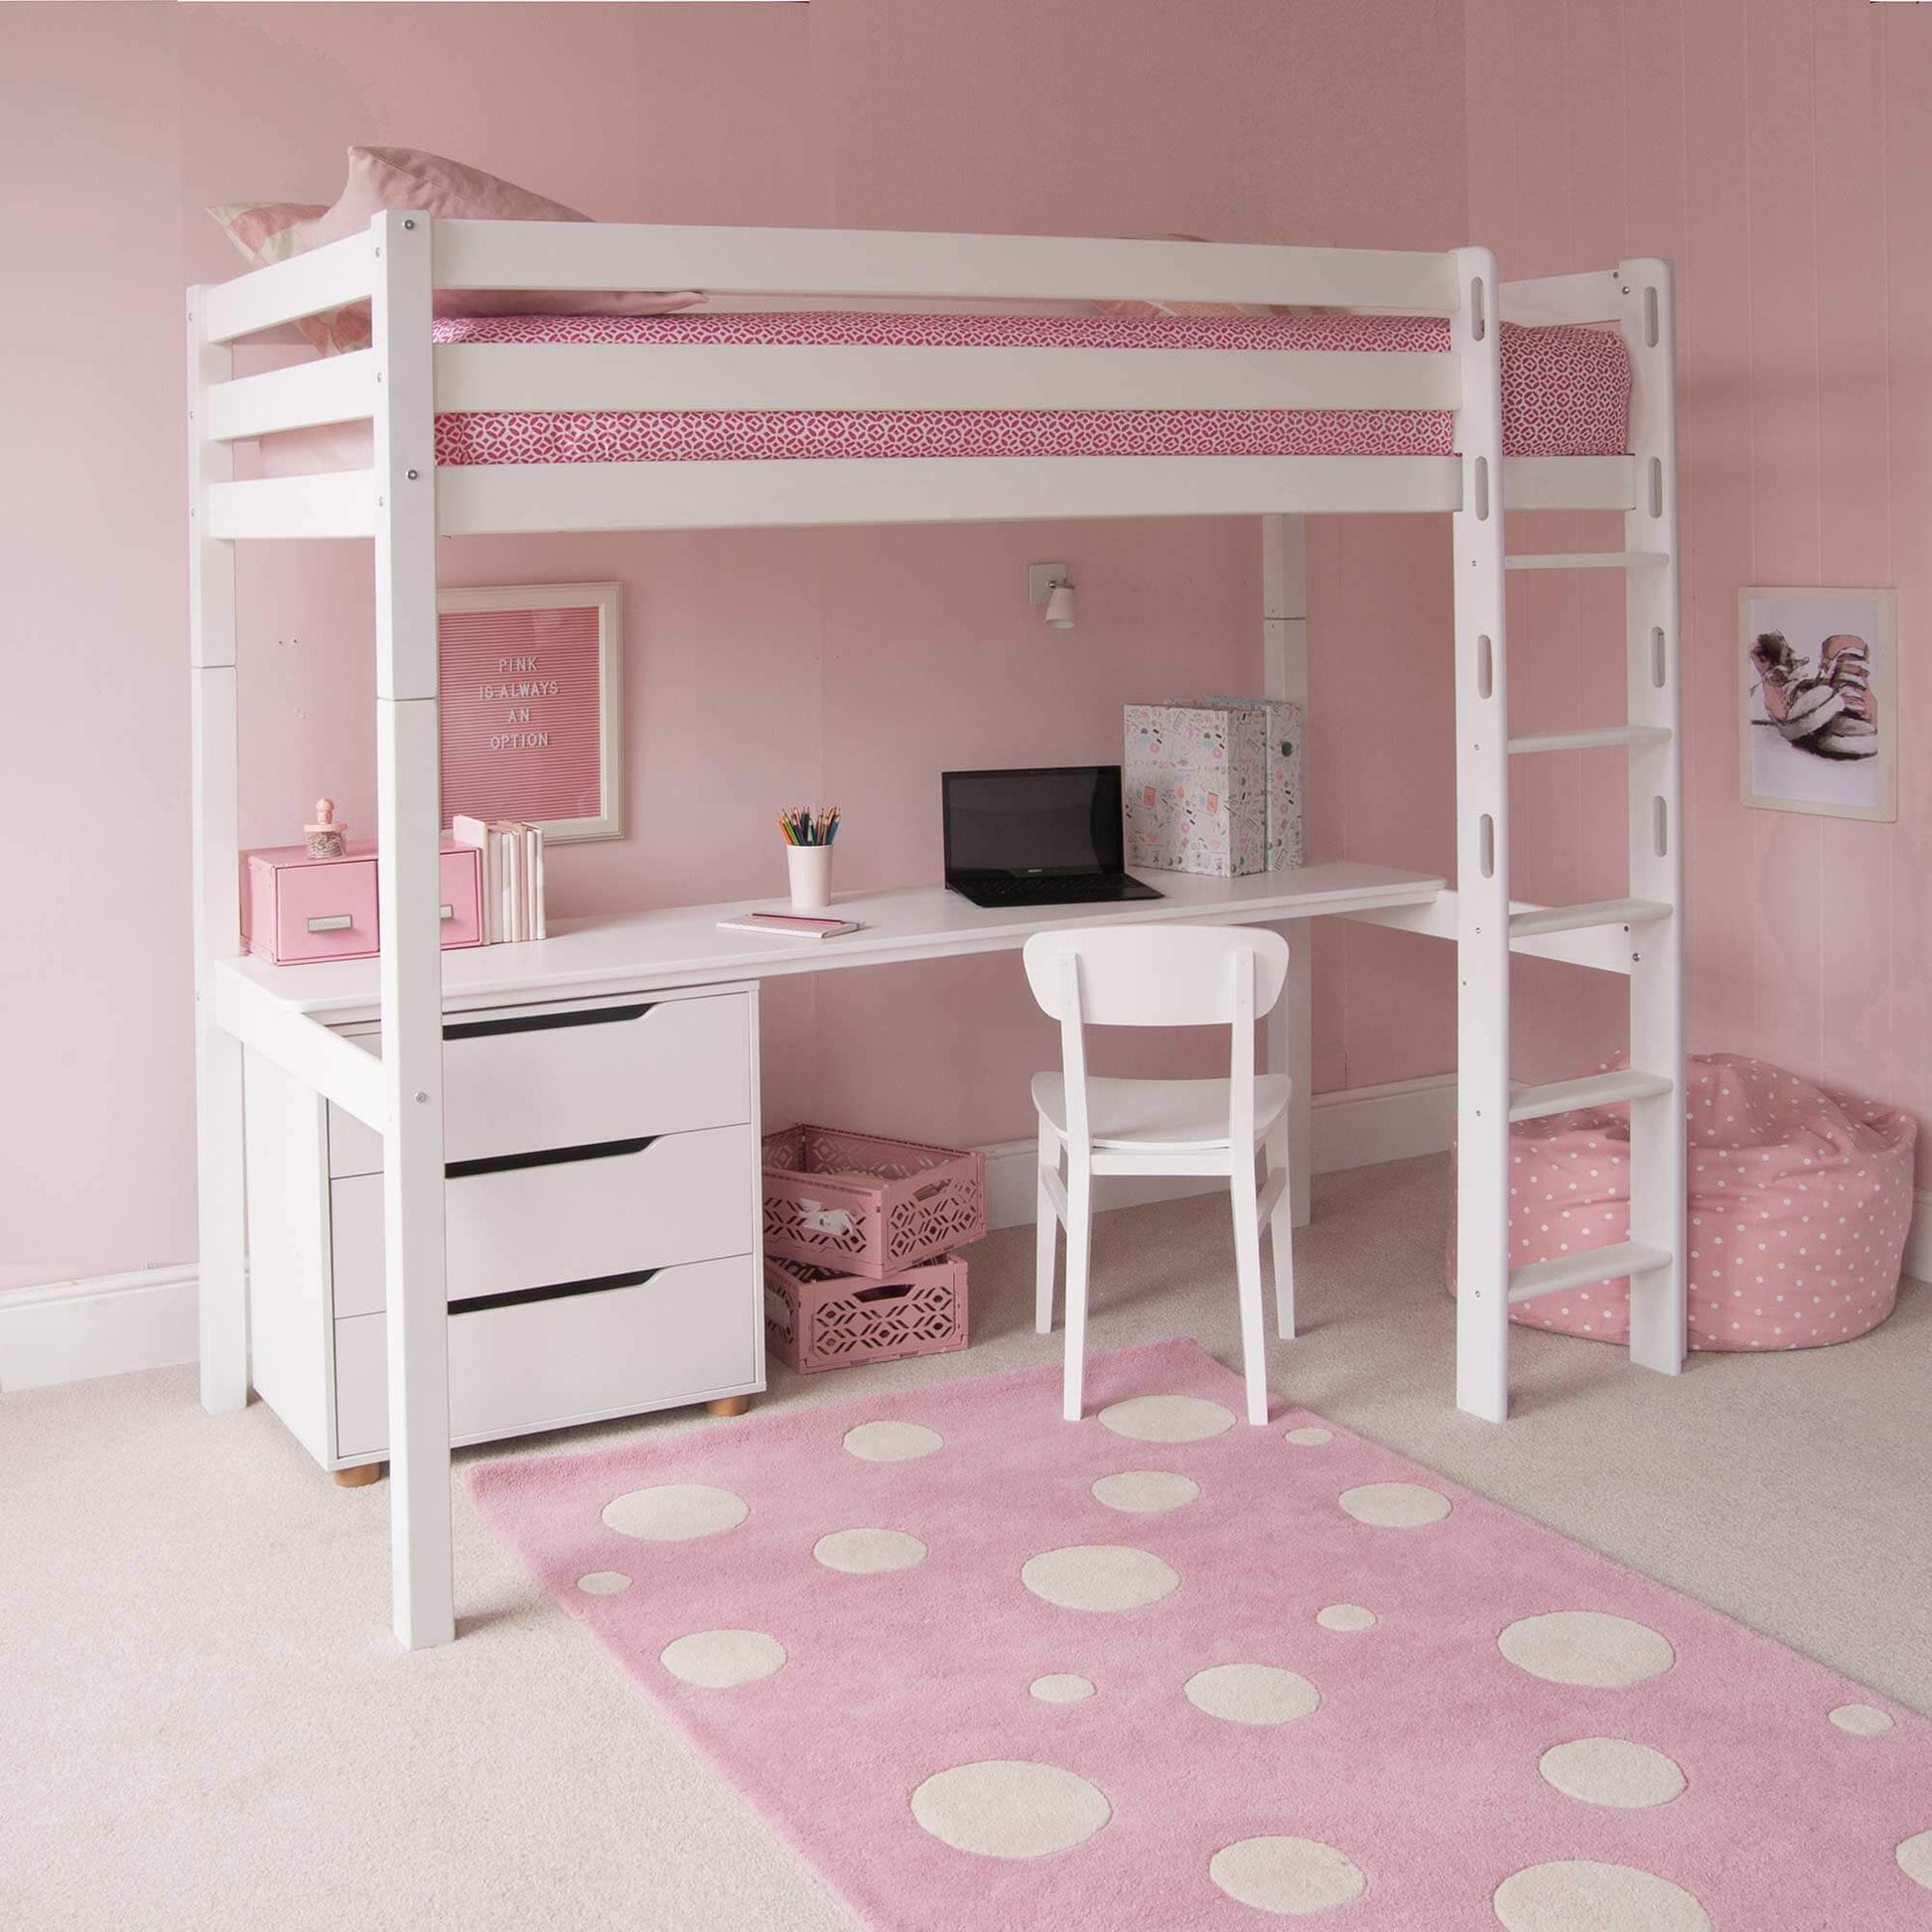 Ivy Classic Beech High Sleeper with Full Length Desk Drawers Girls Room